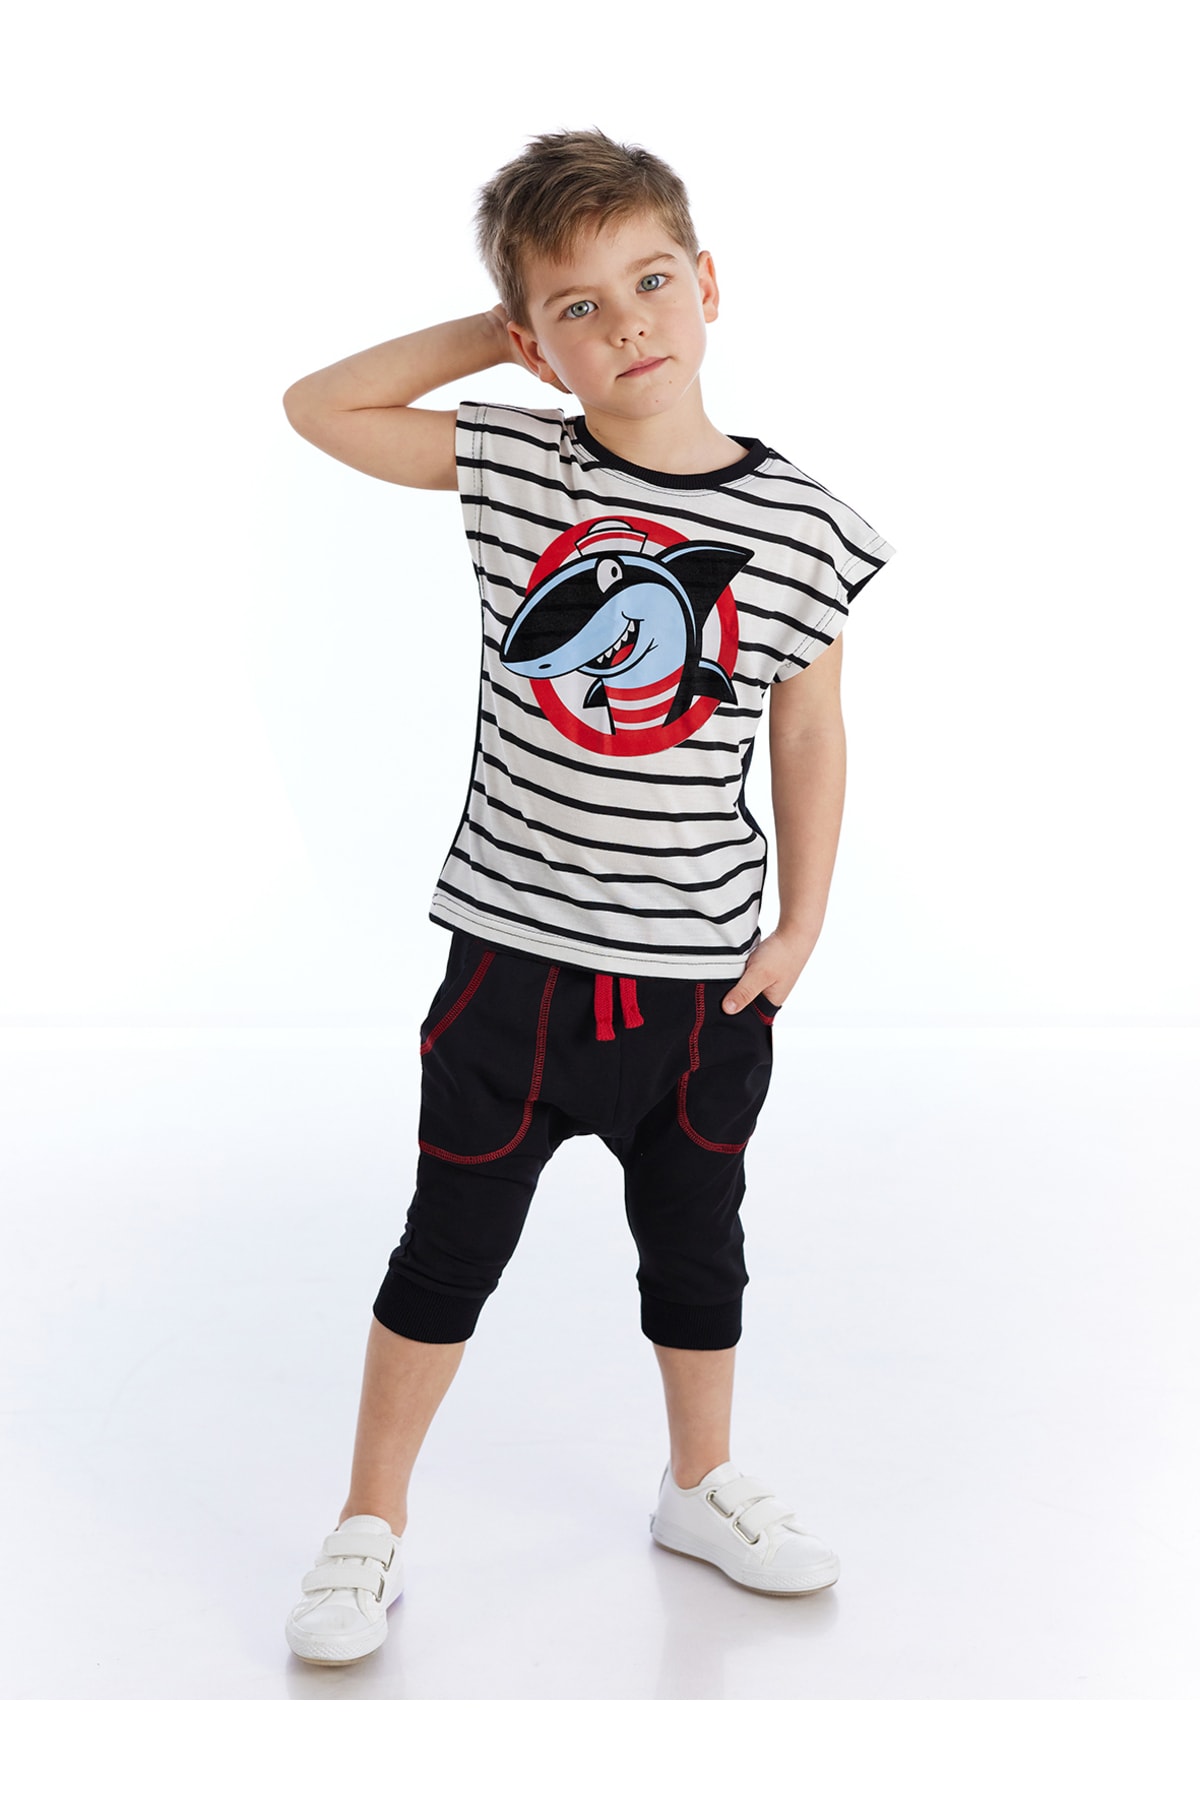 Denokids Sailor Boy T-shirt Capri Shorts Set